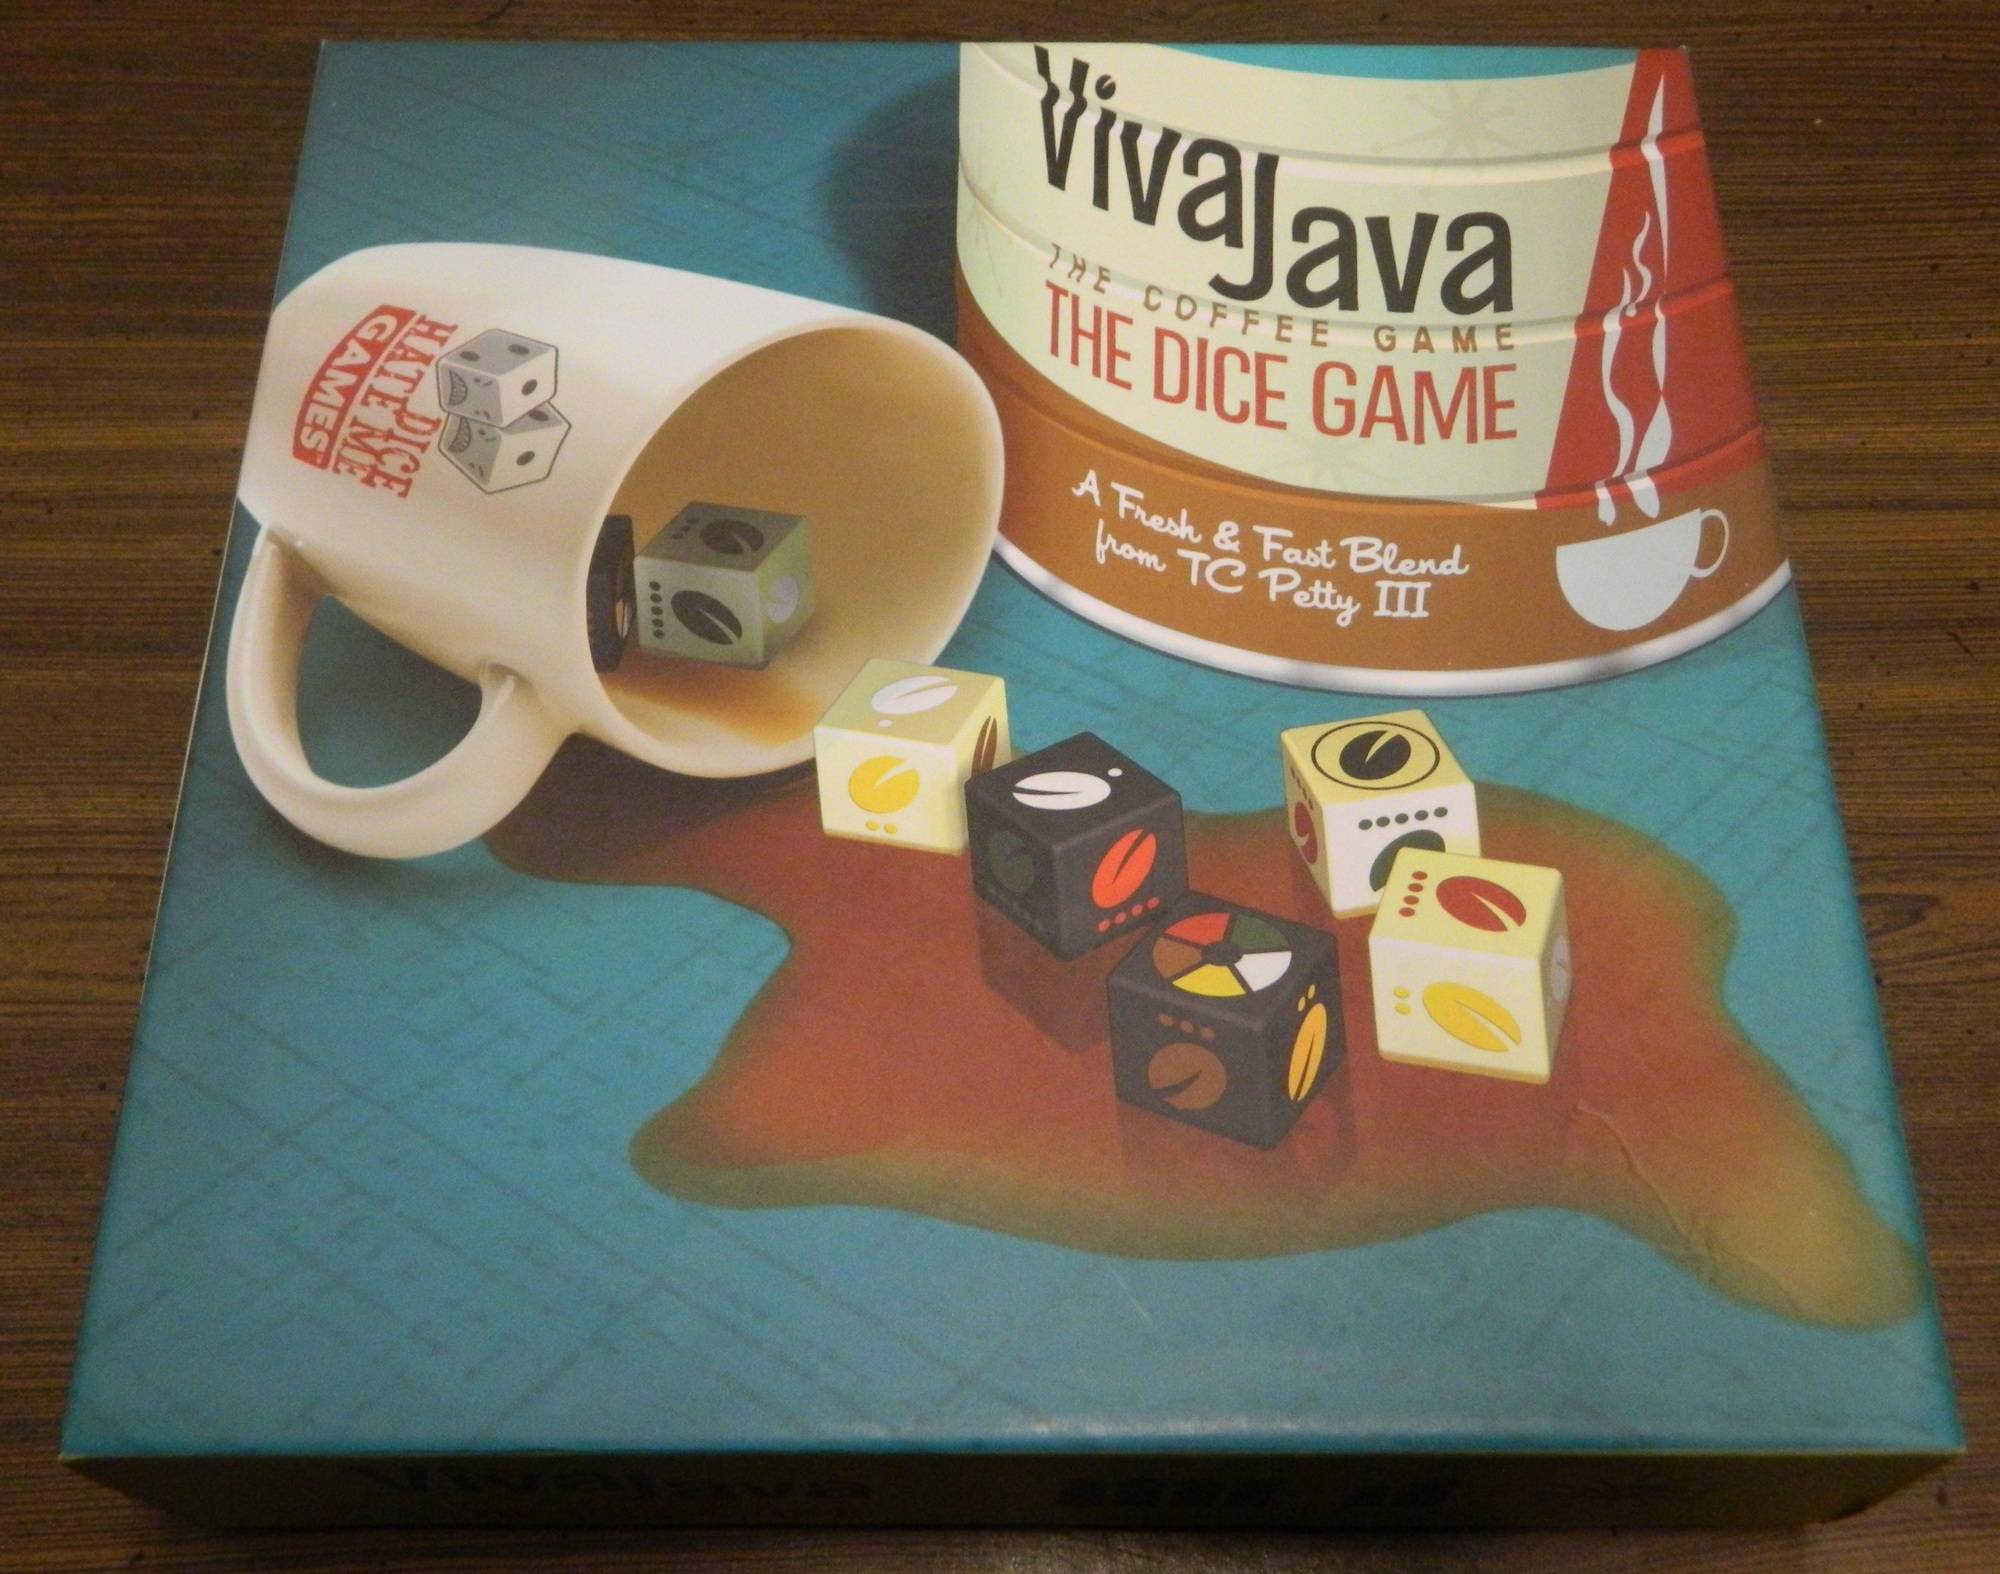 Box for Viva Java Dice Game